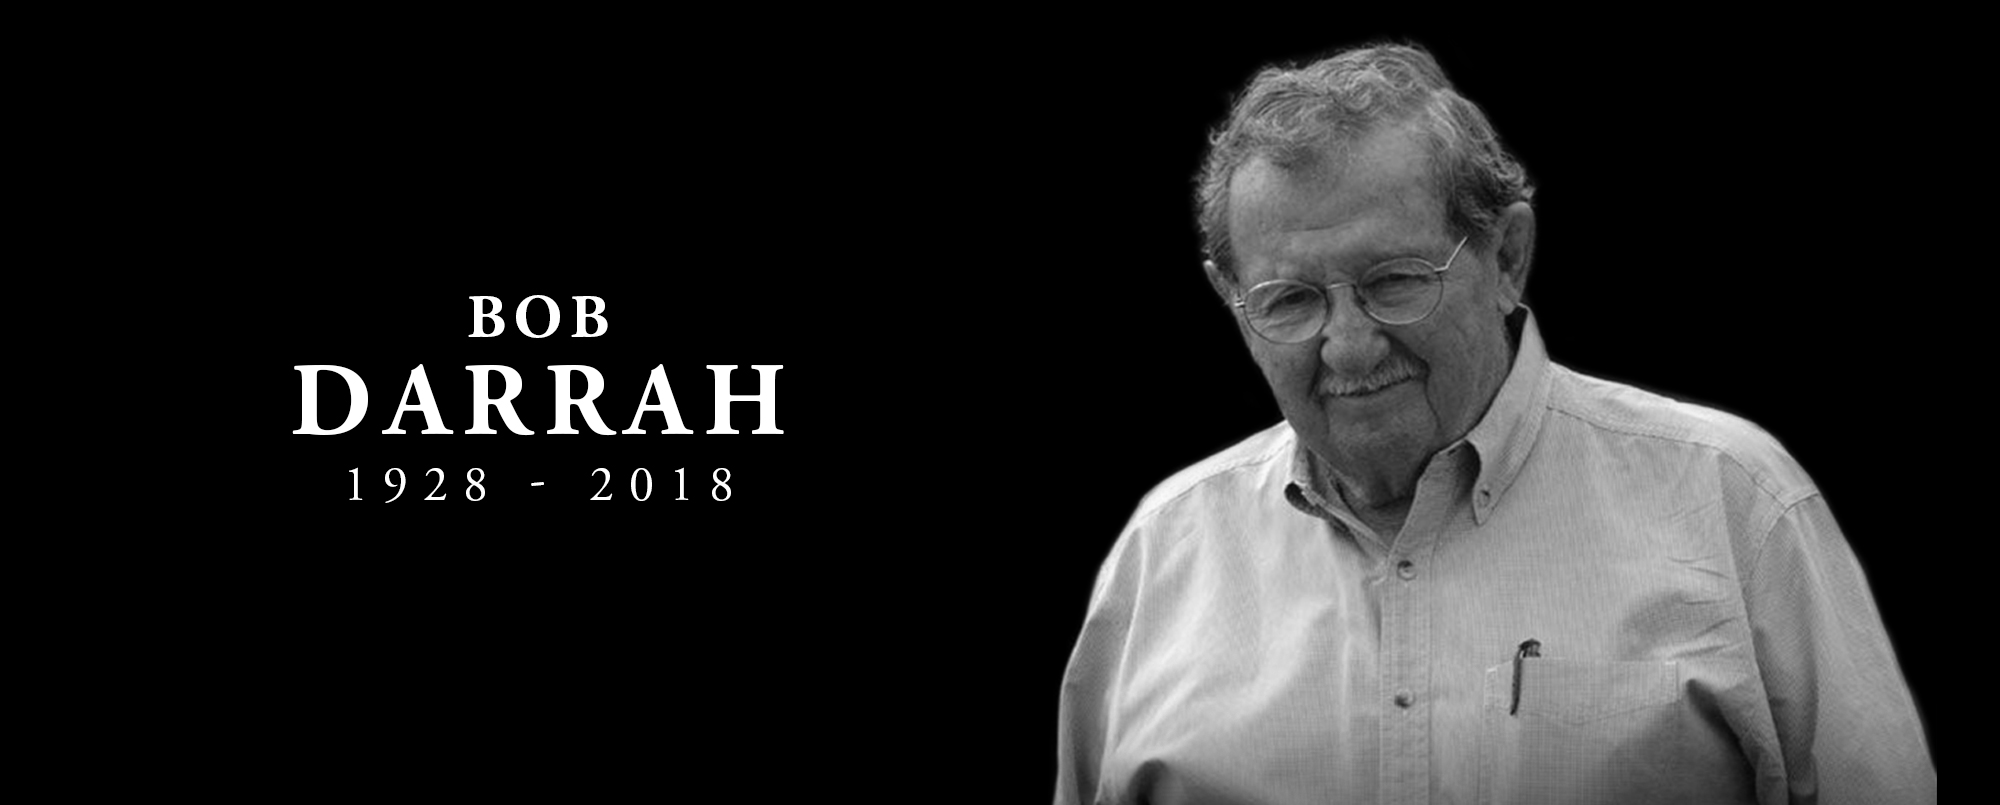 Simpson community mourns loss of longtime coach Bob Darrah